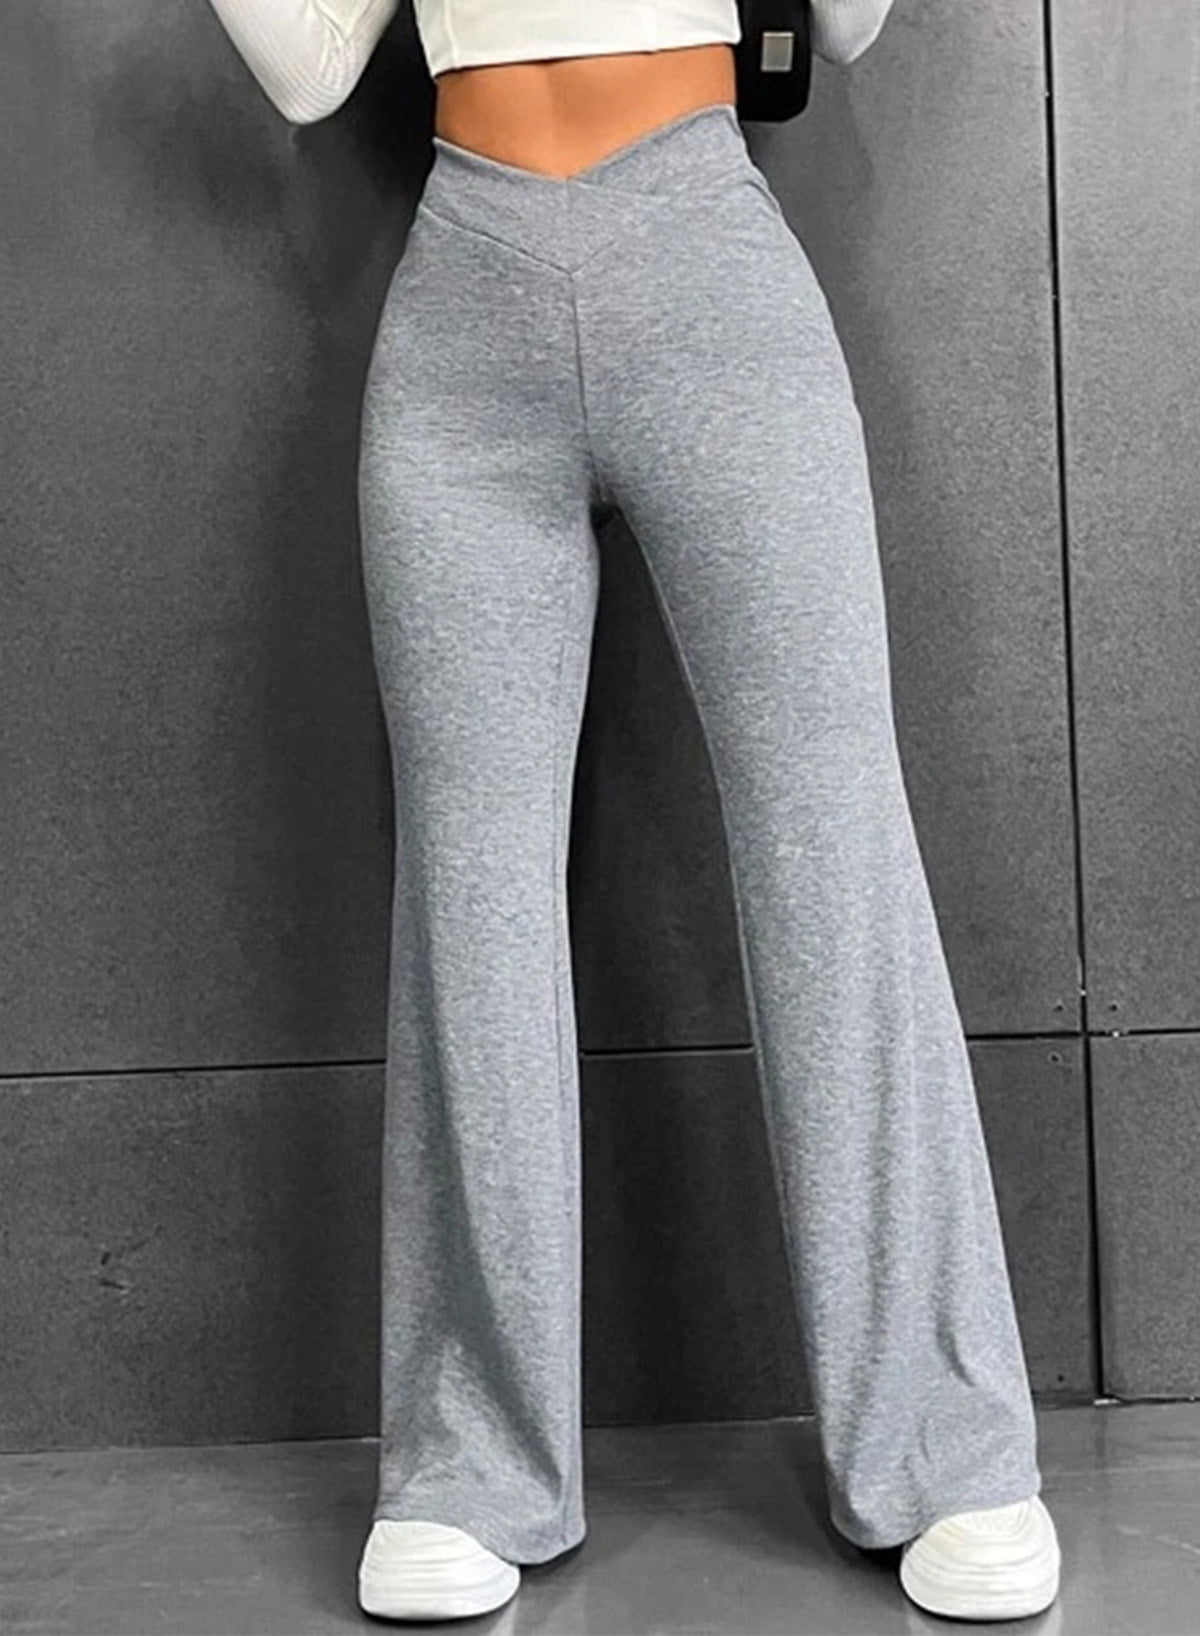 ZKESS Plus Size Leggins Elastic High Waisted Crossover Flare Pants